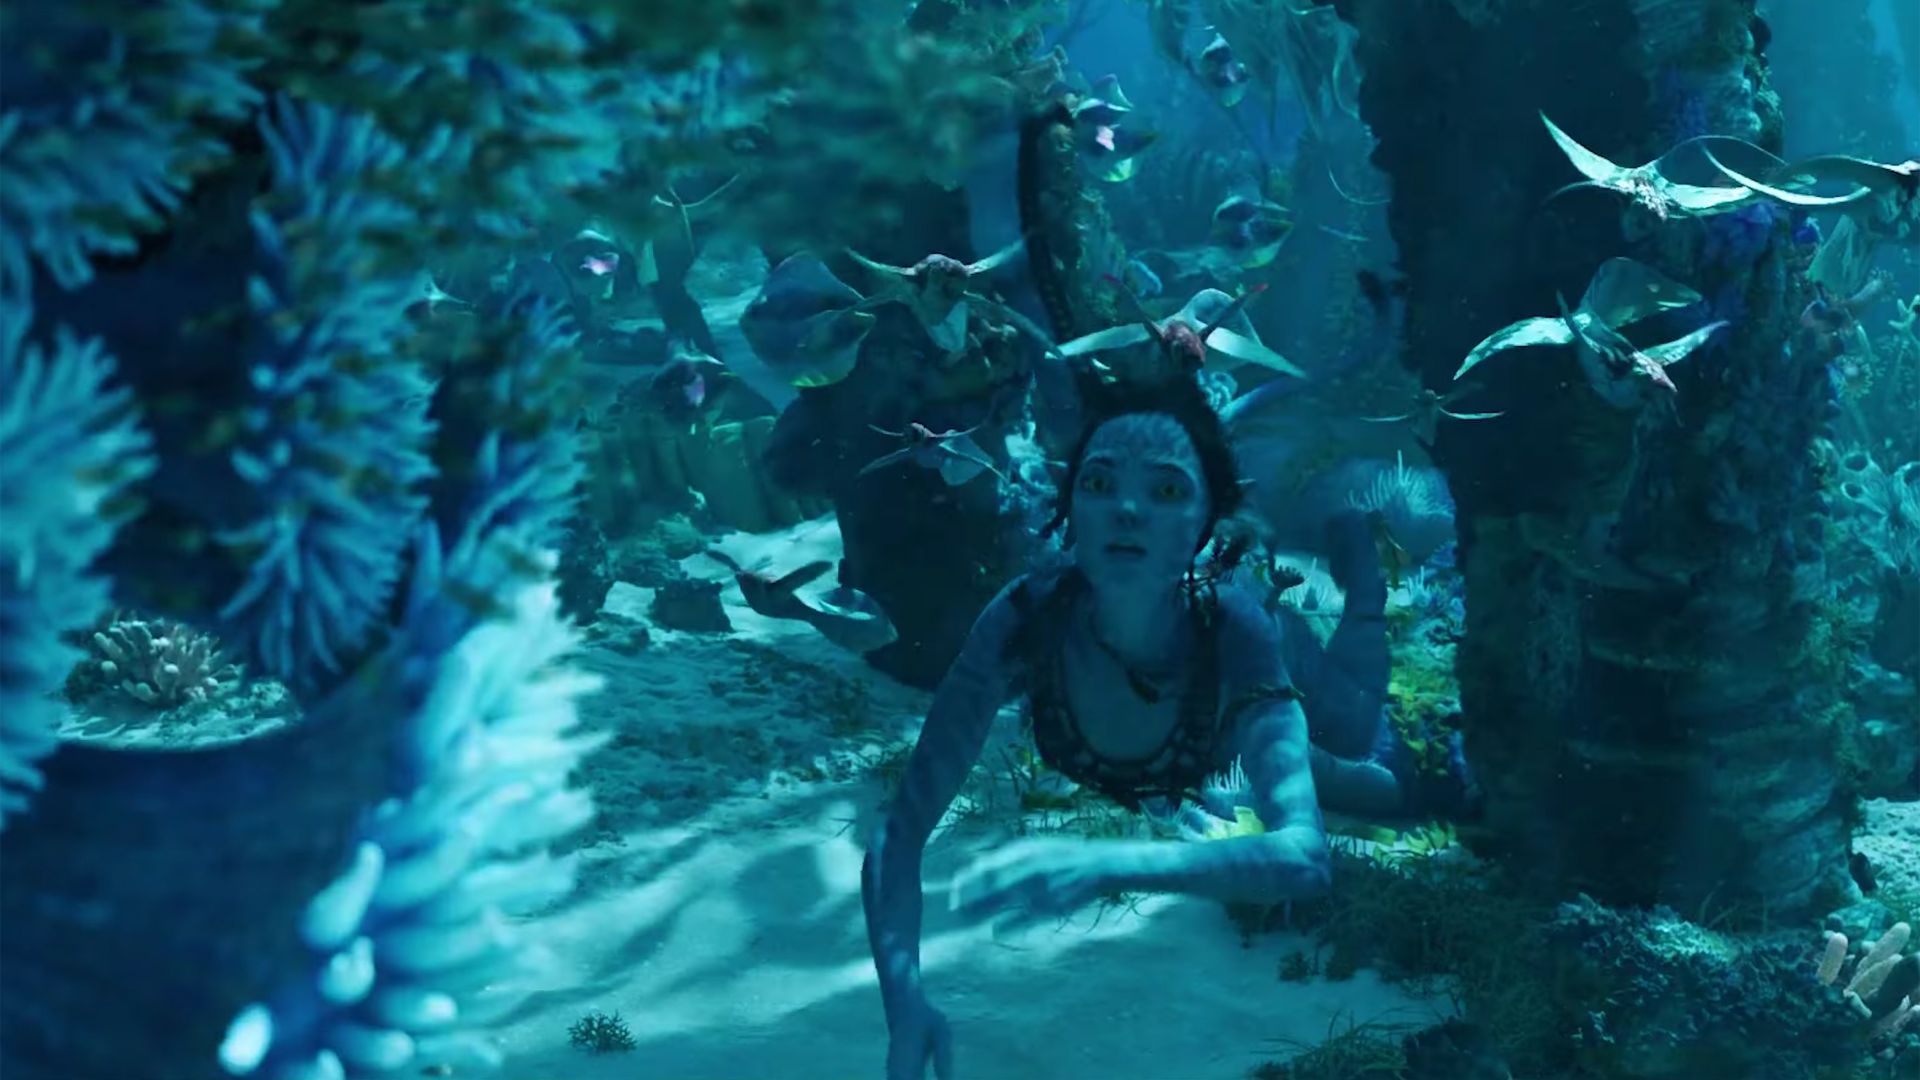 Аватар 2: Путь воды, Avatar 2 The Way of Water, 4k, trailer (horizontal)